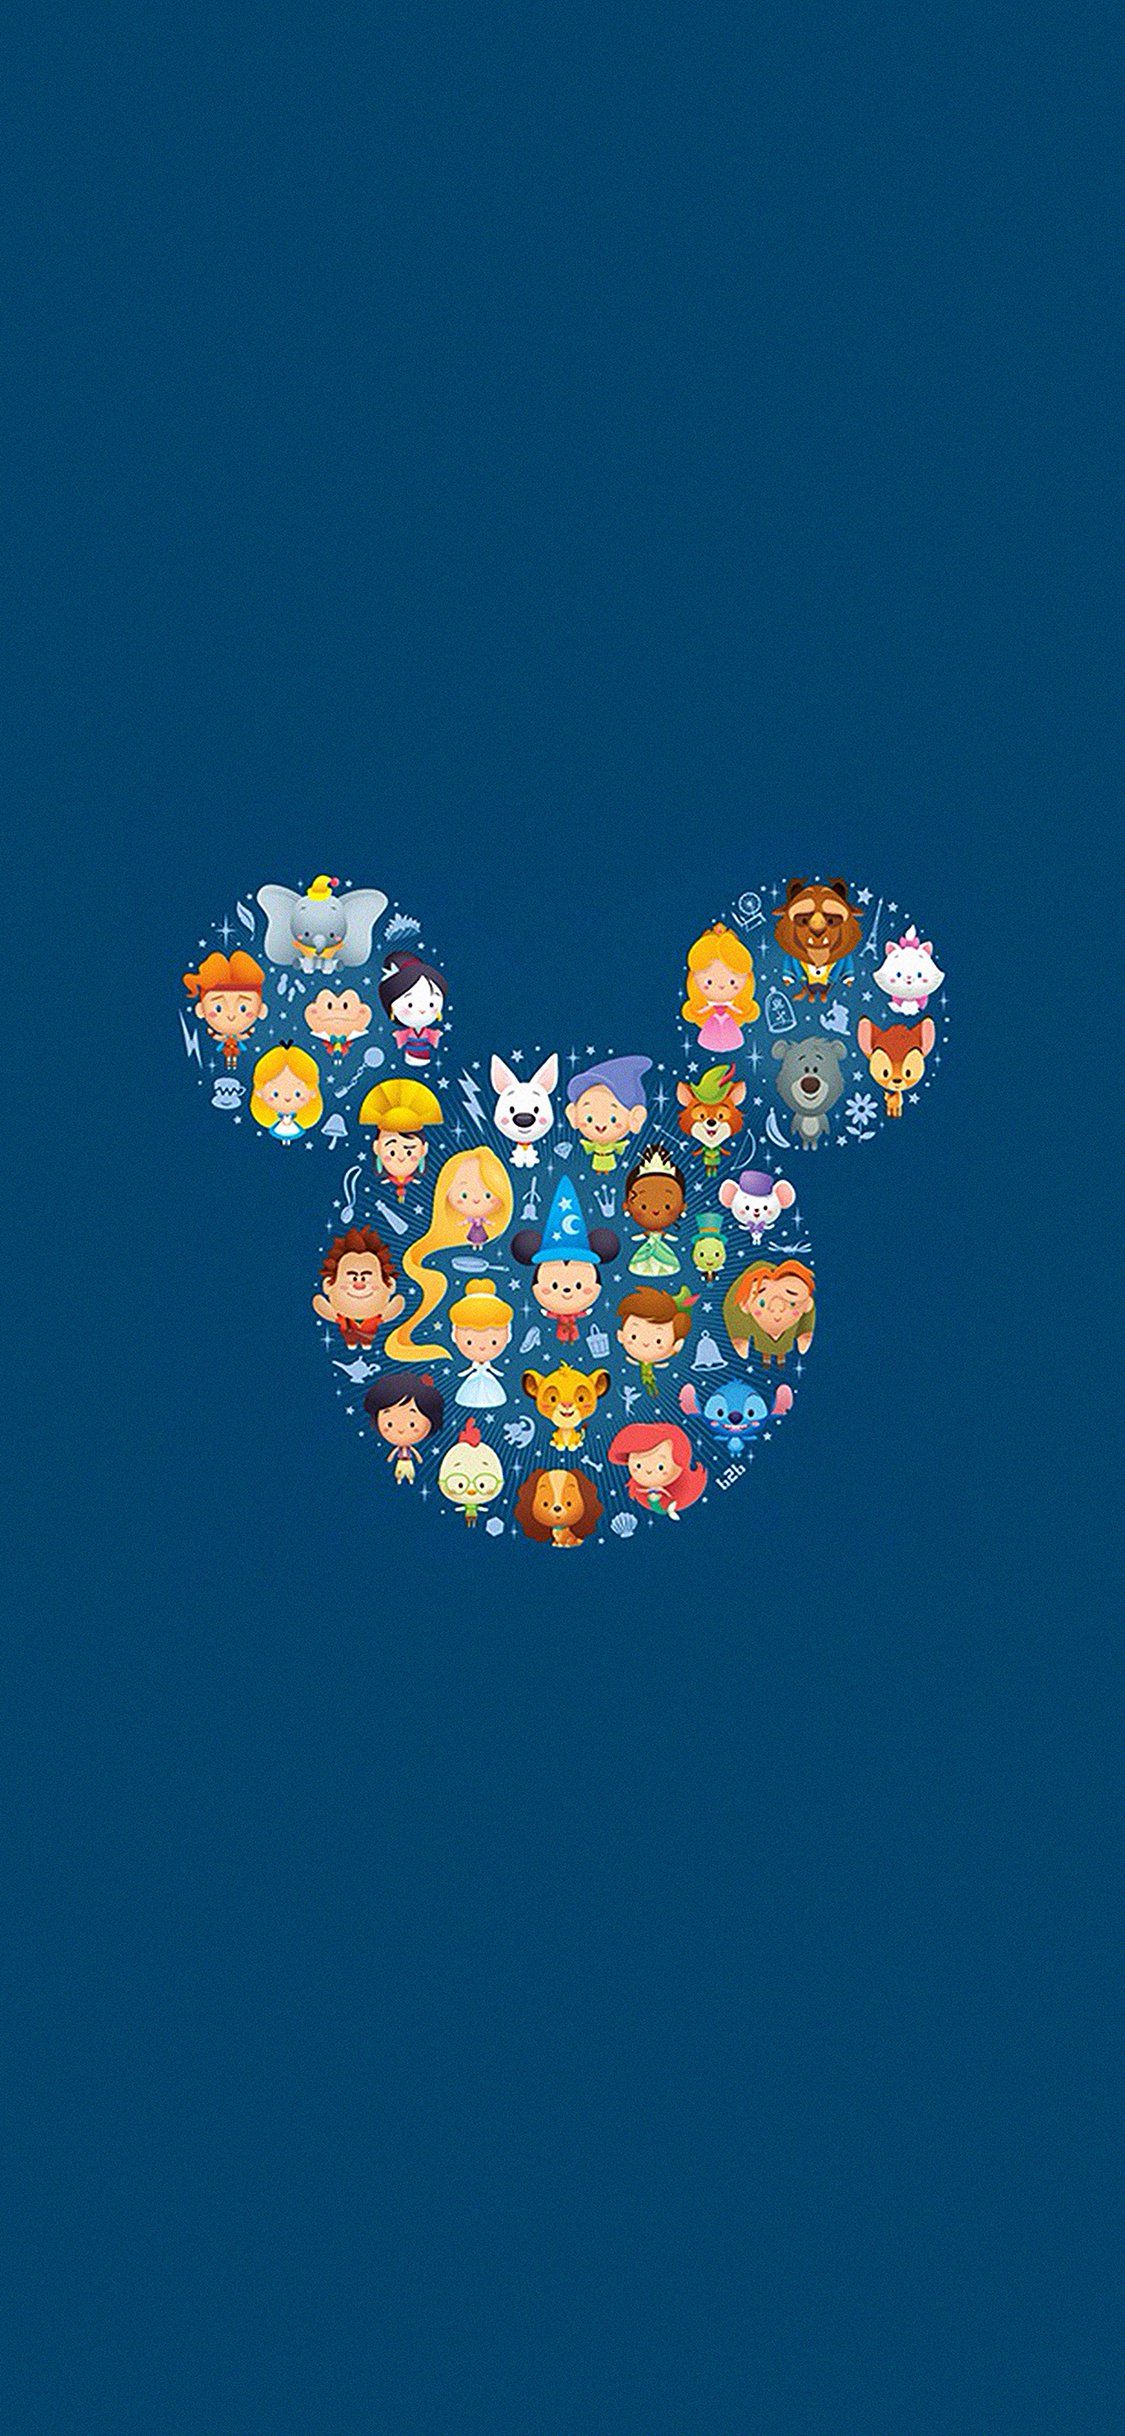 Disney art character cute iPhone Wallpaper Free Download